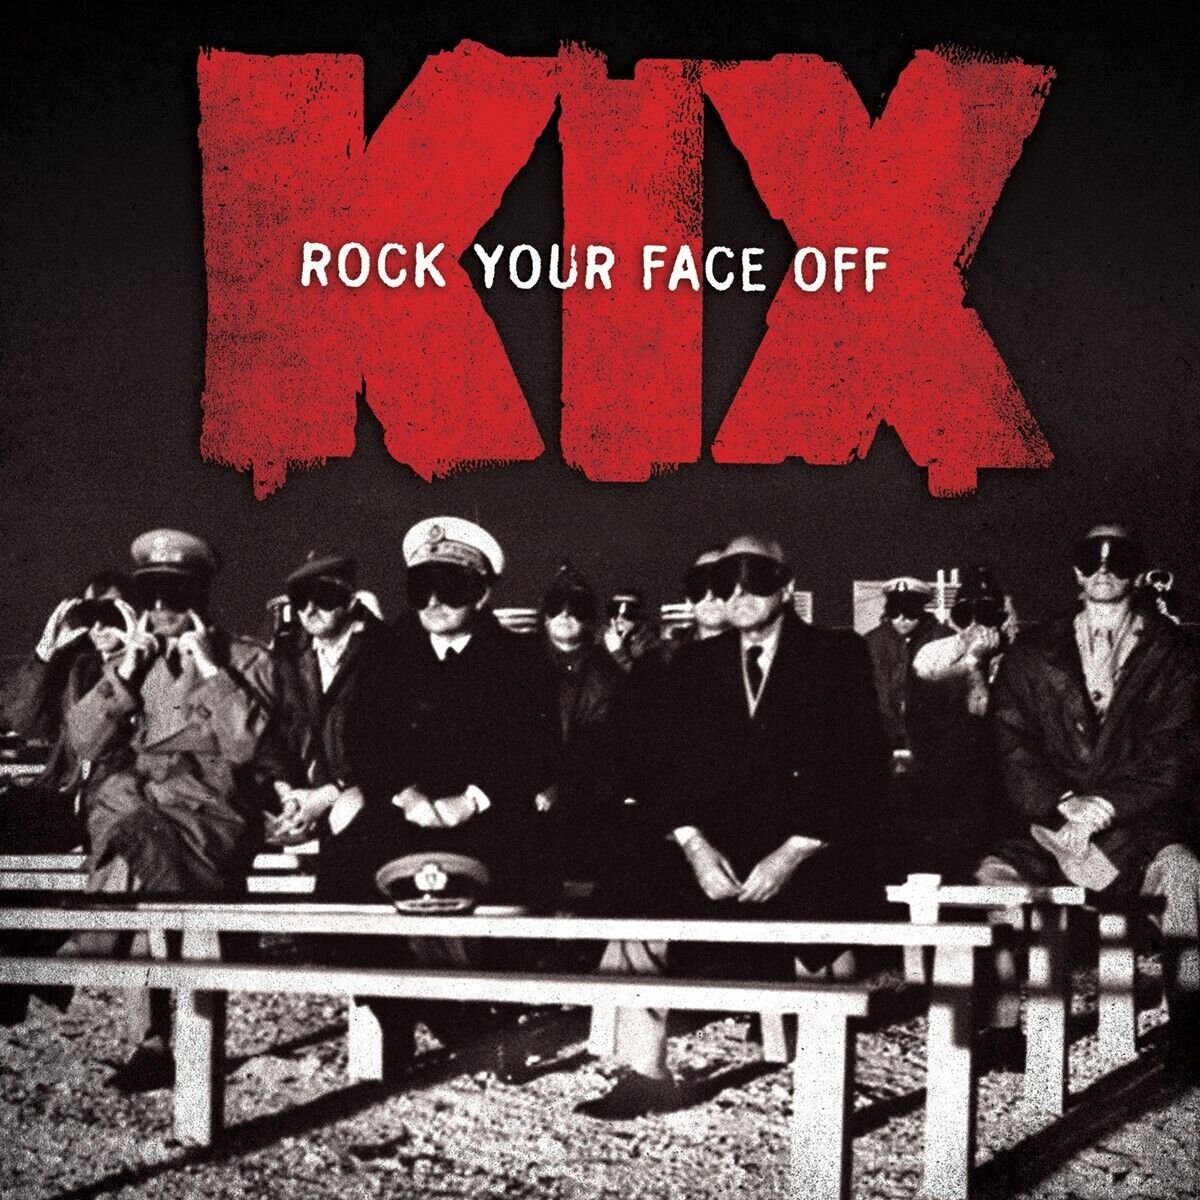 KIX Rock Your Face Off BANNER HUGE 4X4 Ft Fabric Poster Tapestry Flag album art